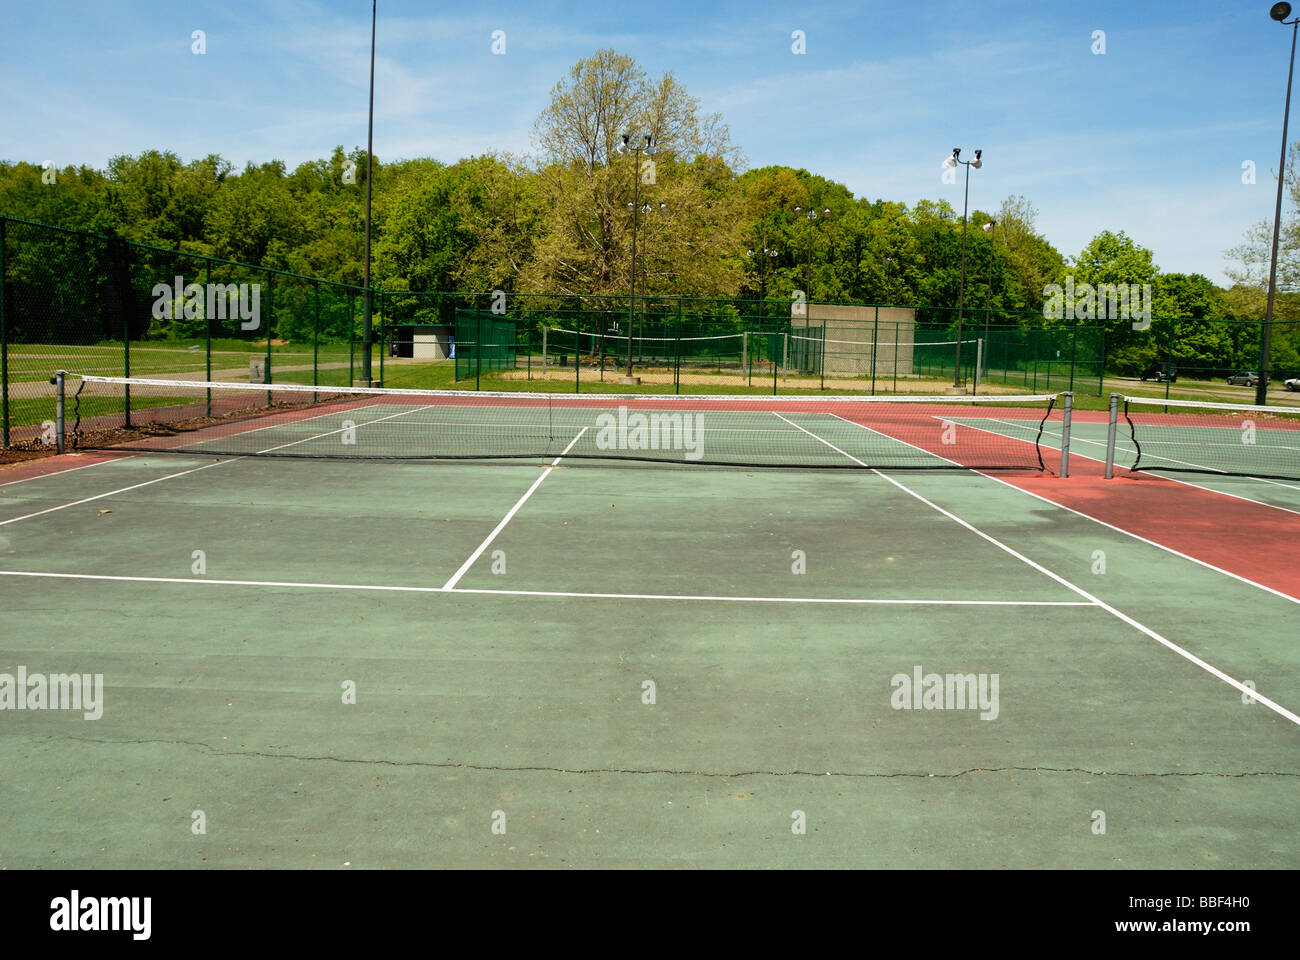 Tennis court at park Stock Photo